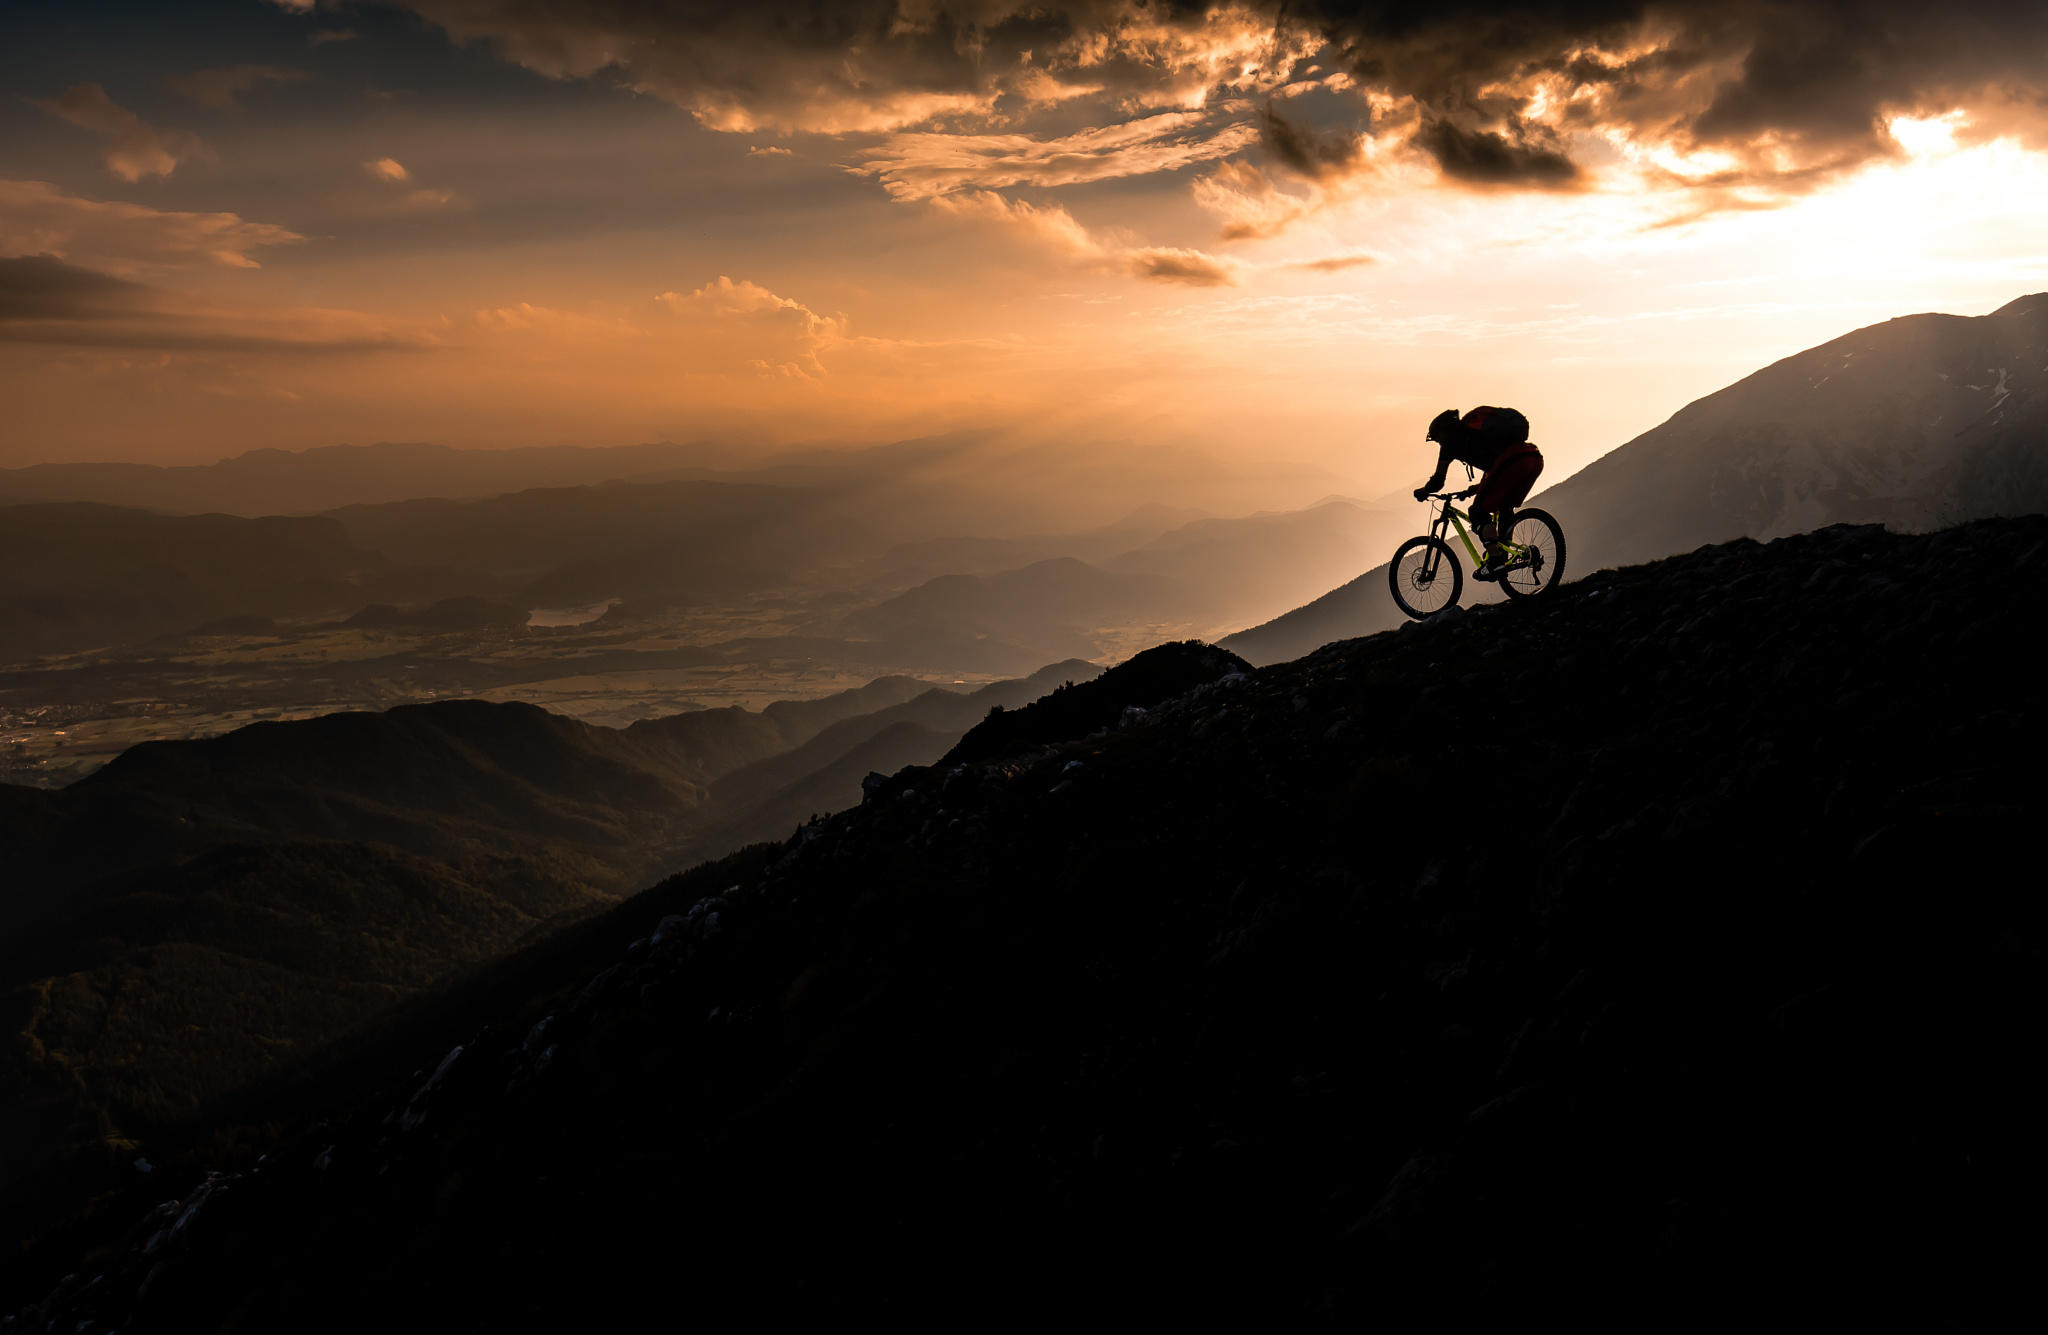 Sunset ridge ride